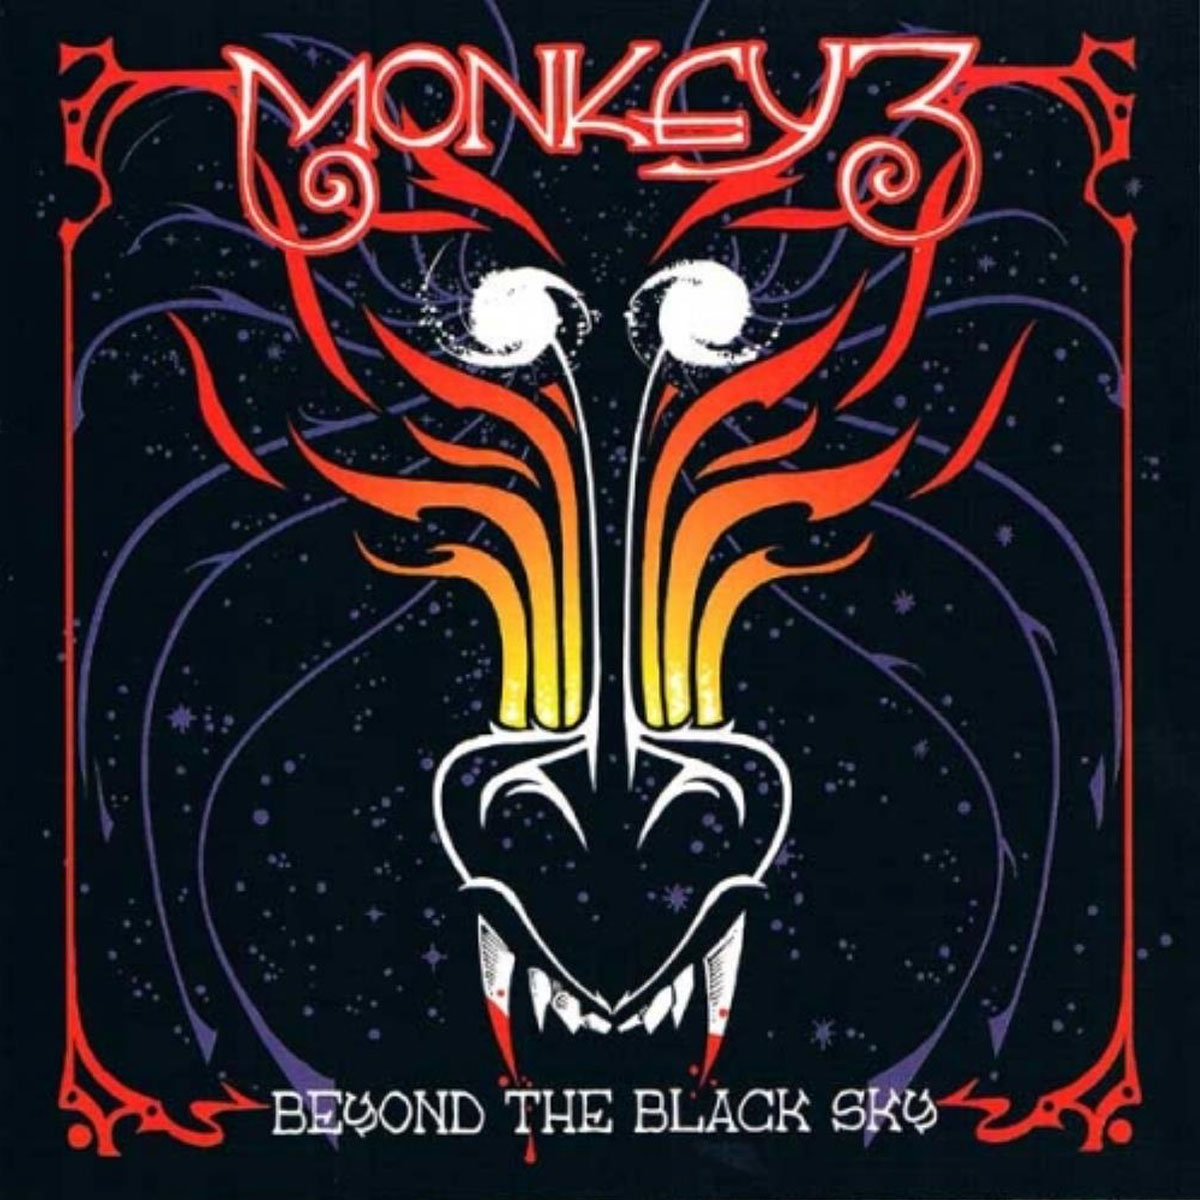 Beyond the Black Sky by Monkey3